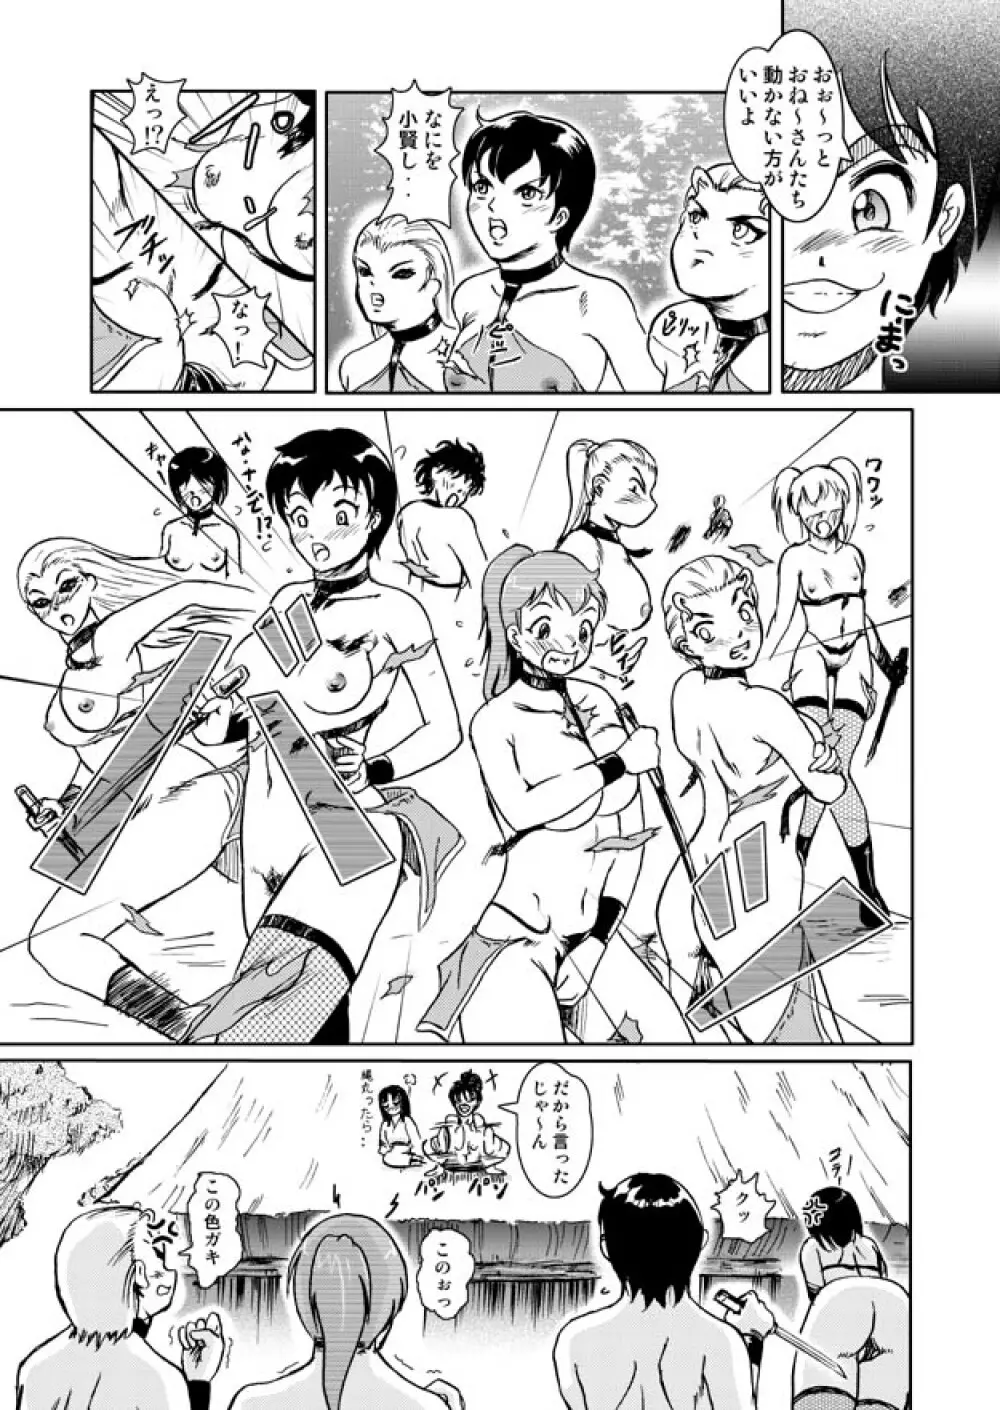 Same-themed manga about kid fighting female ninjas from japanese imageboard. 6ページ